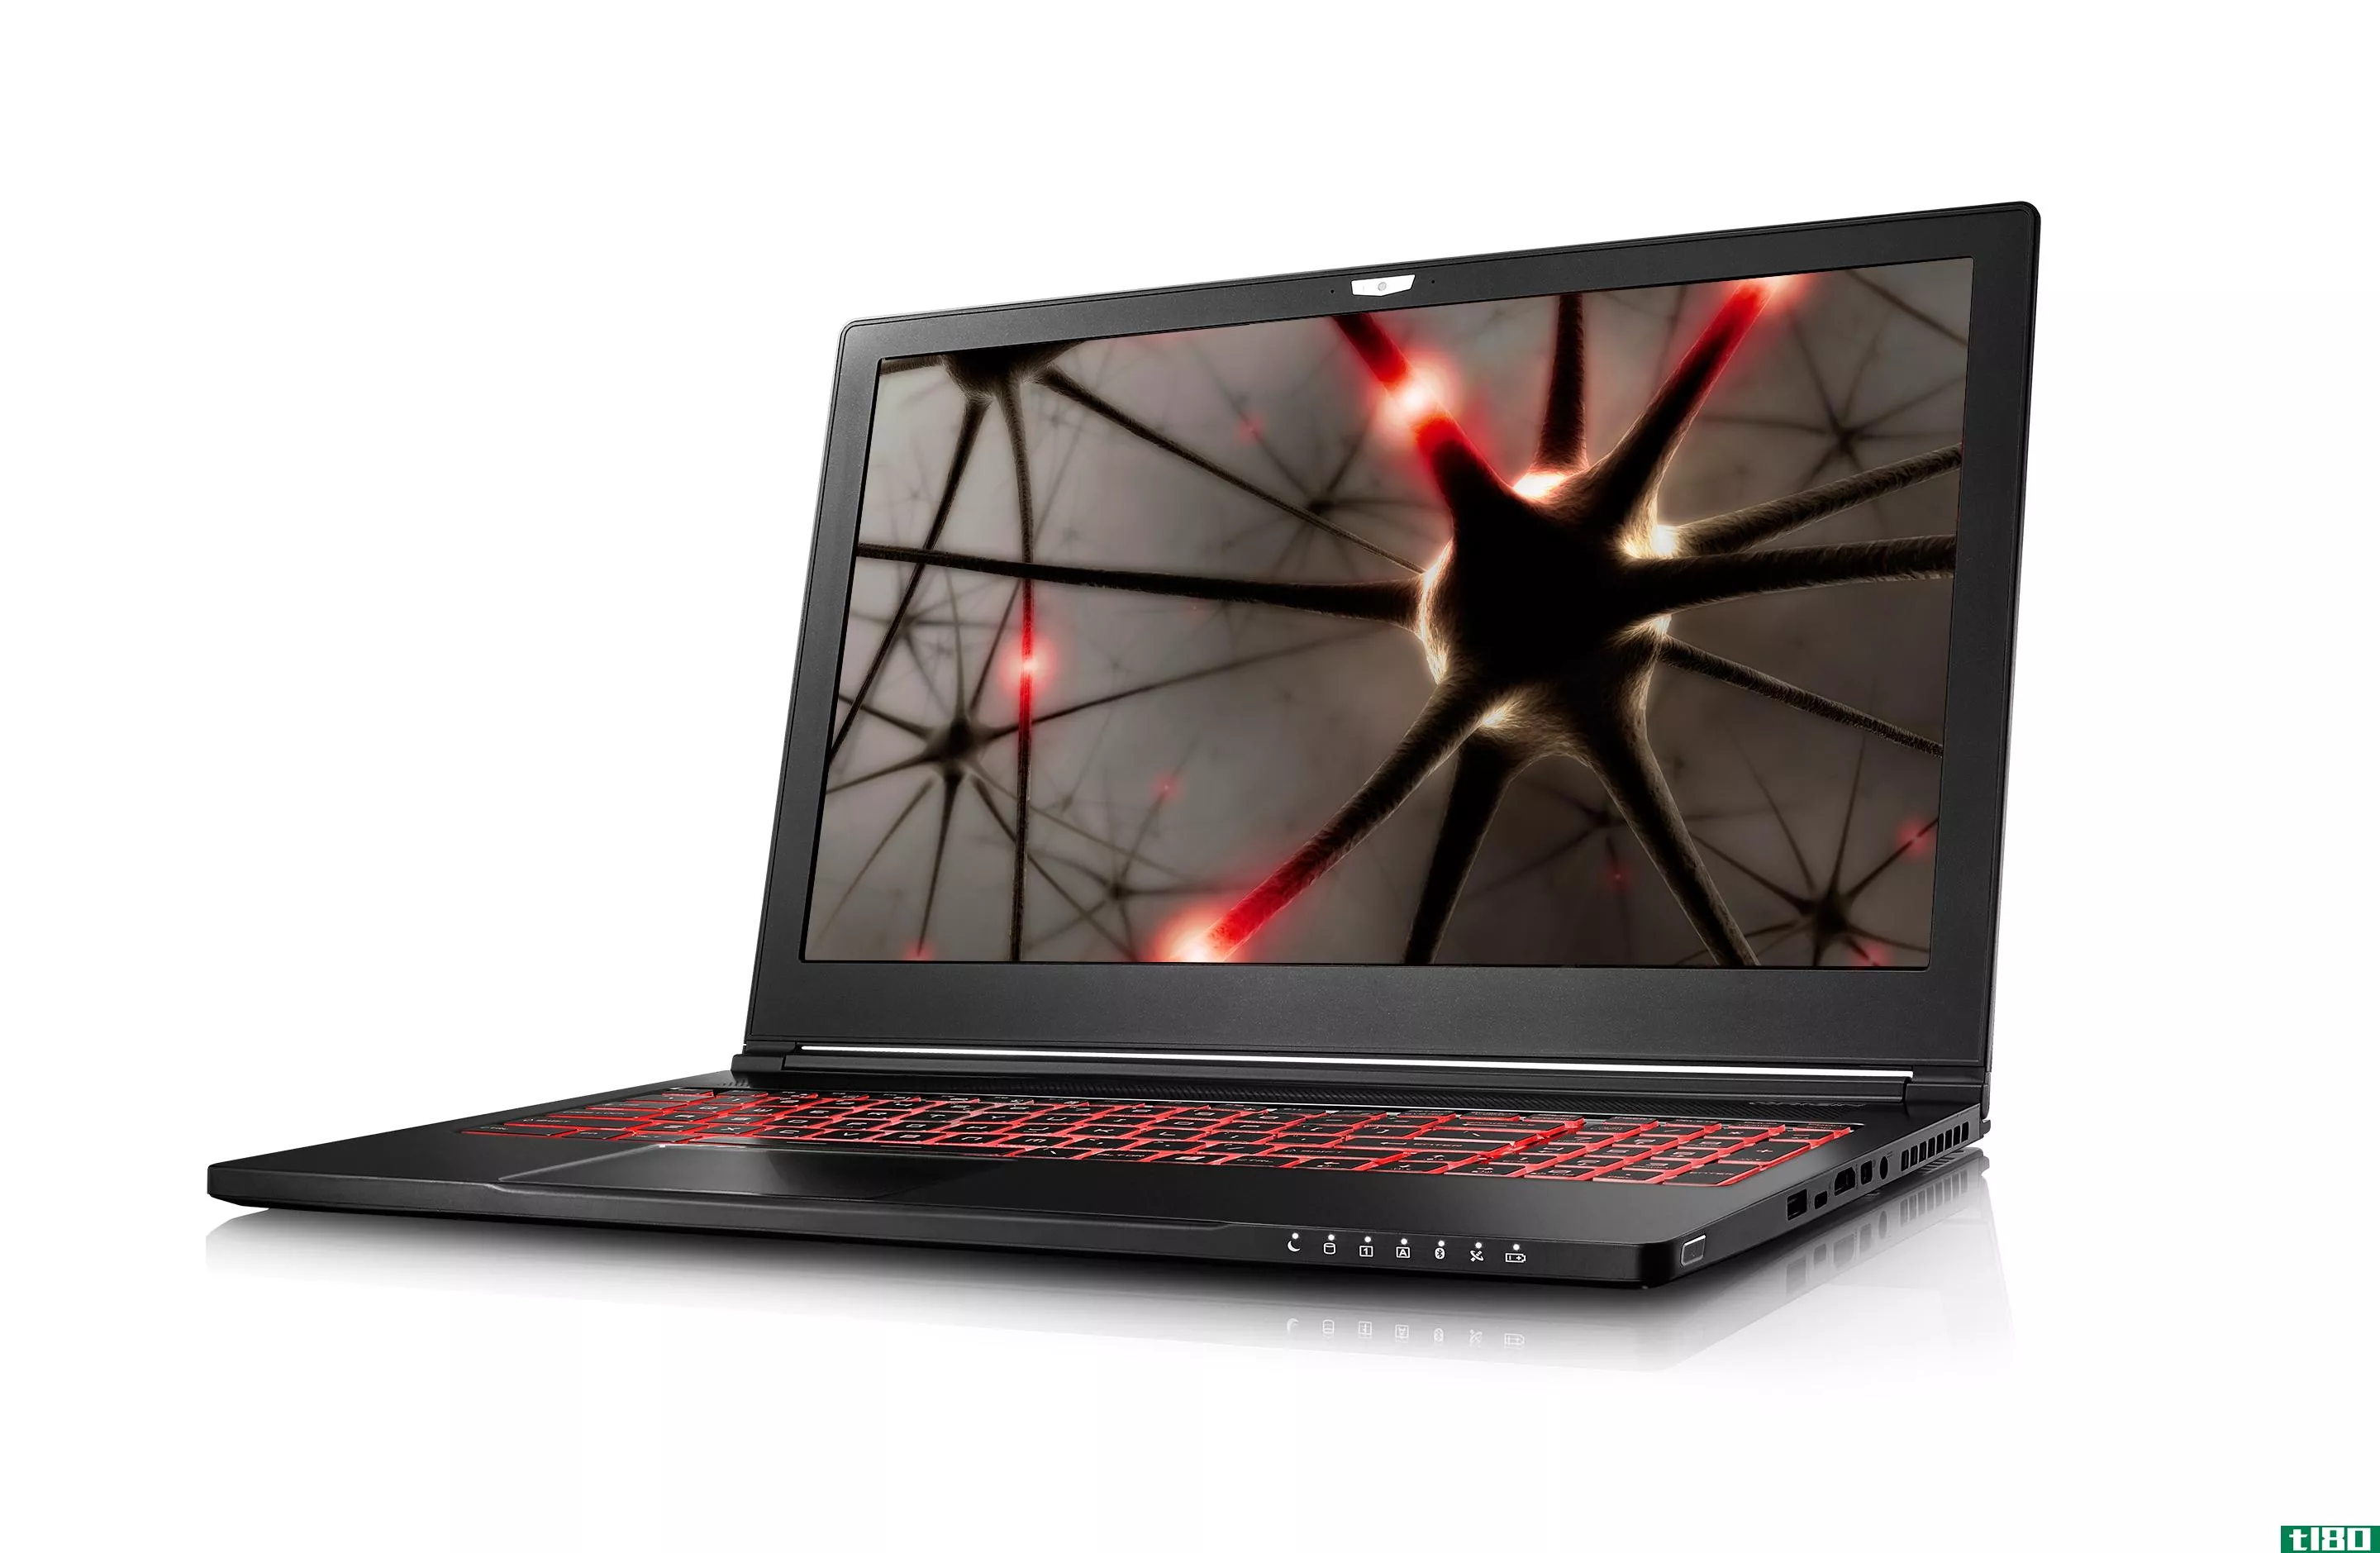 origin pc宣布推出带有“vr ready”gtx 1060 gpu的新型瘦笔记本电脑